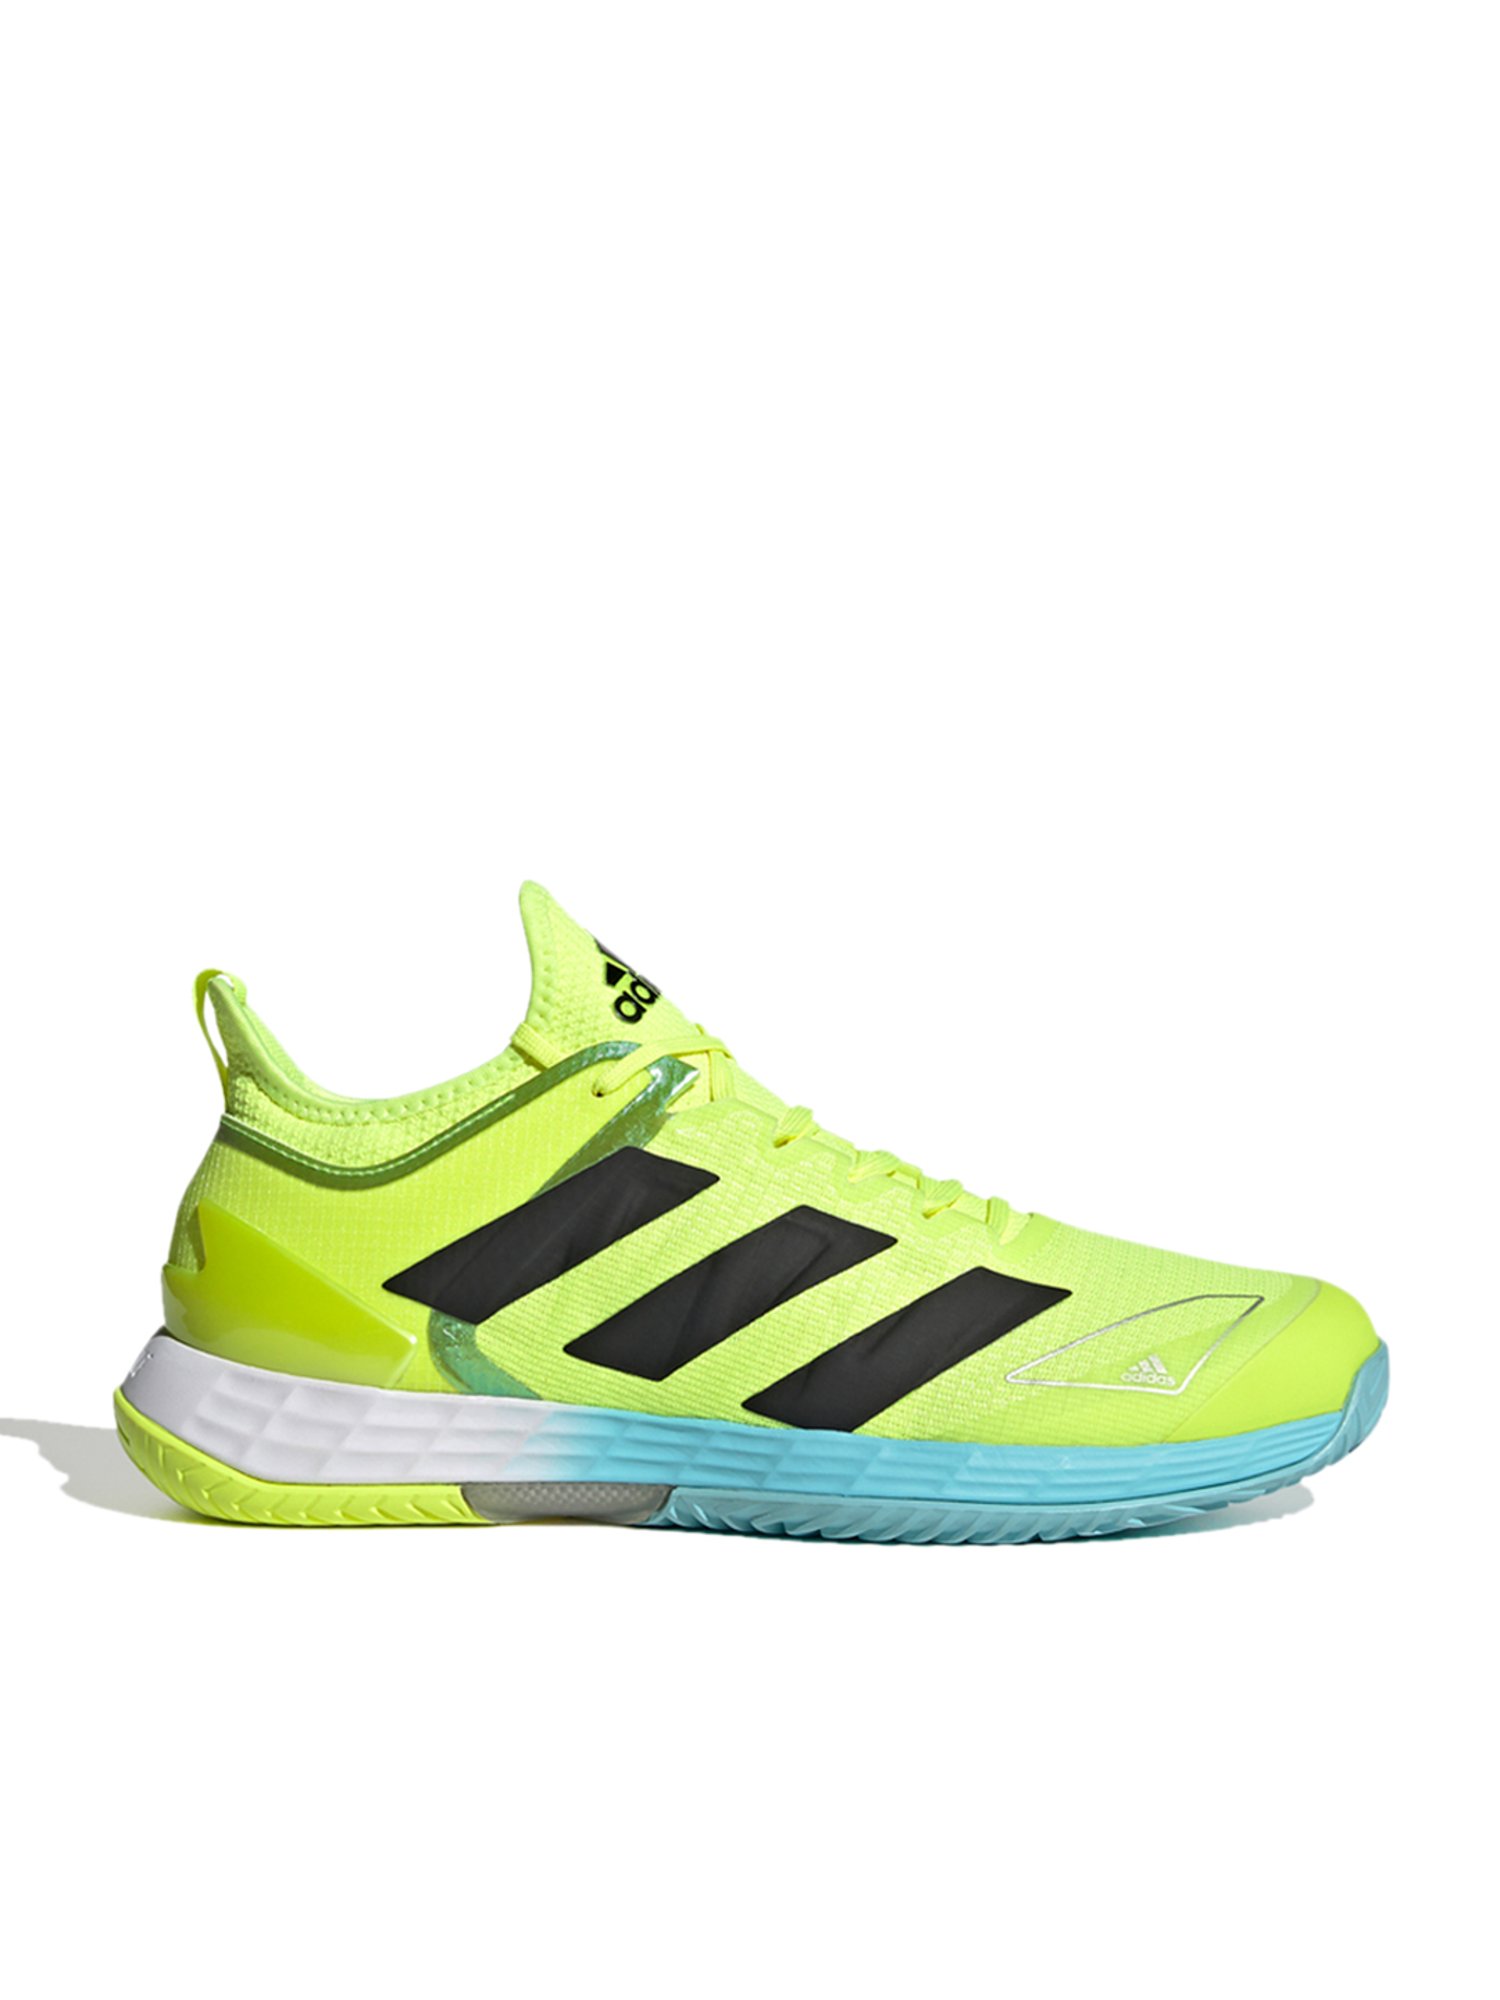 neon yellow tennis shoes